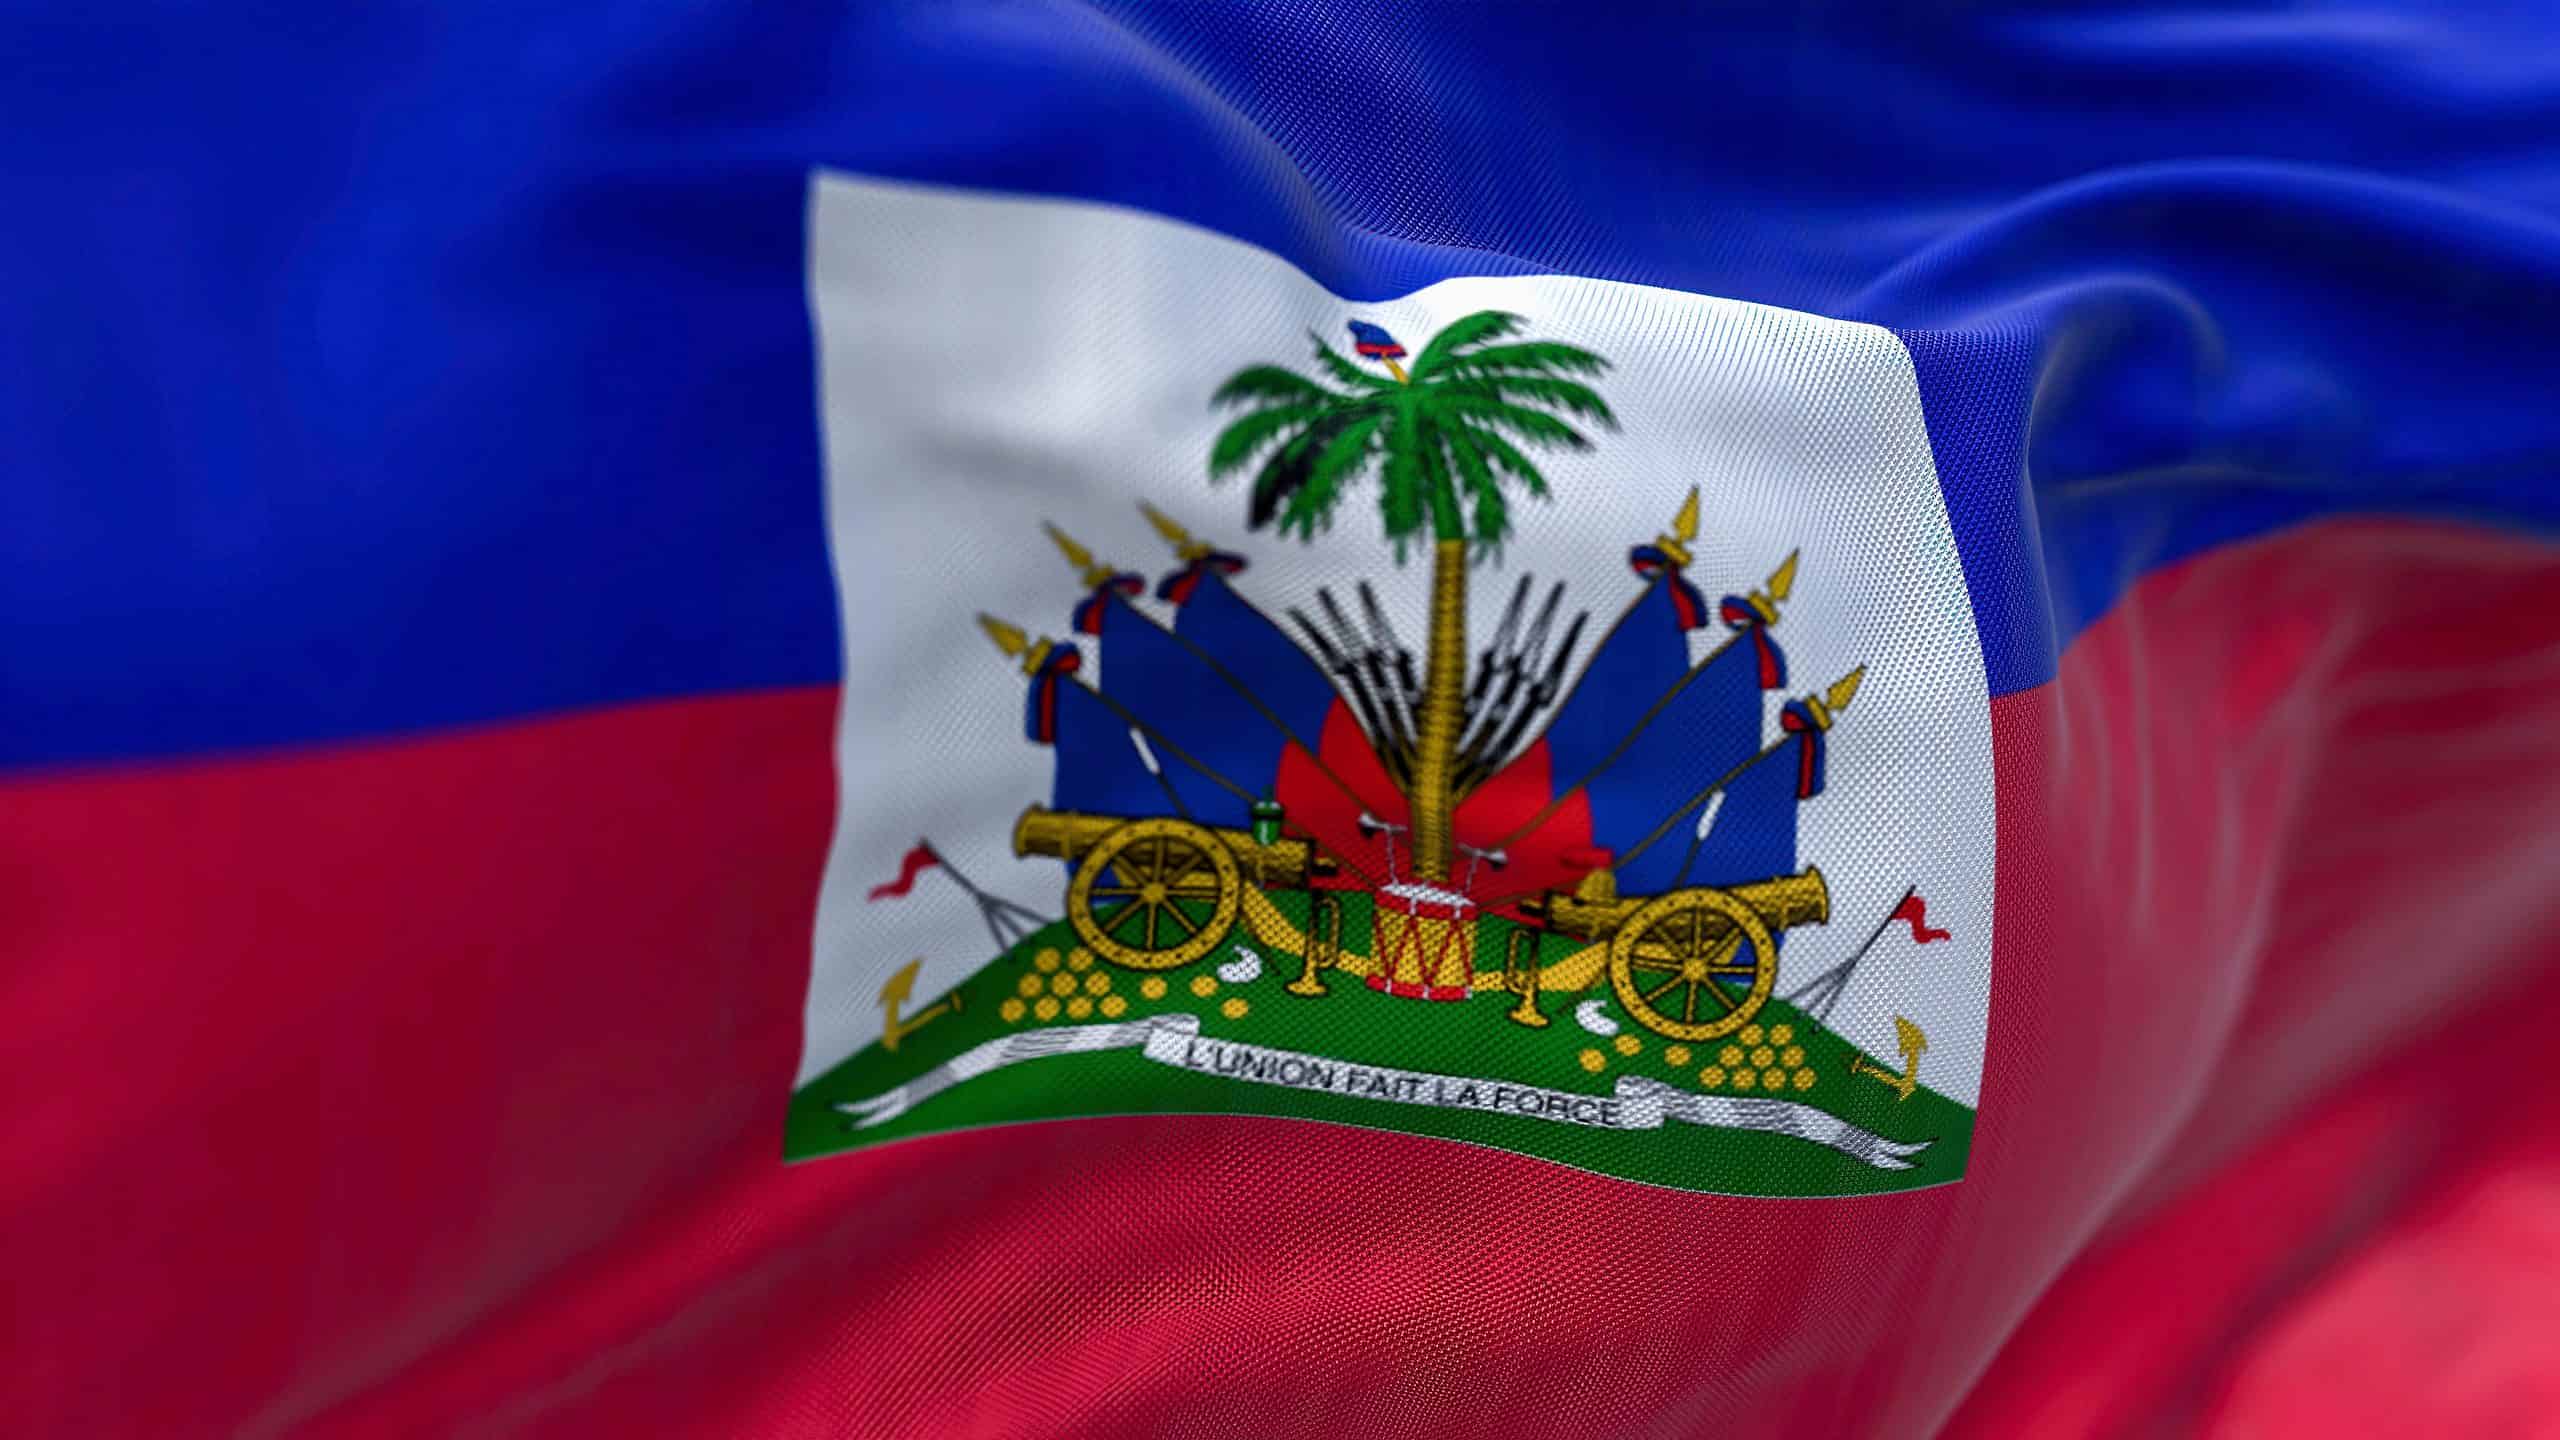 the flag of Haiti